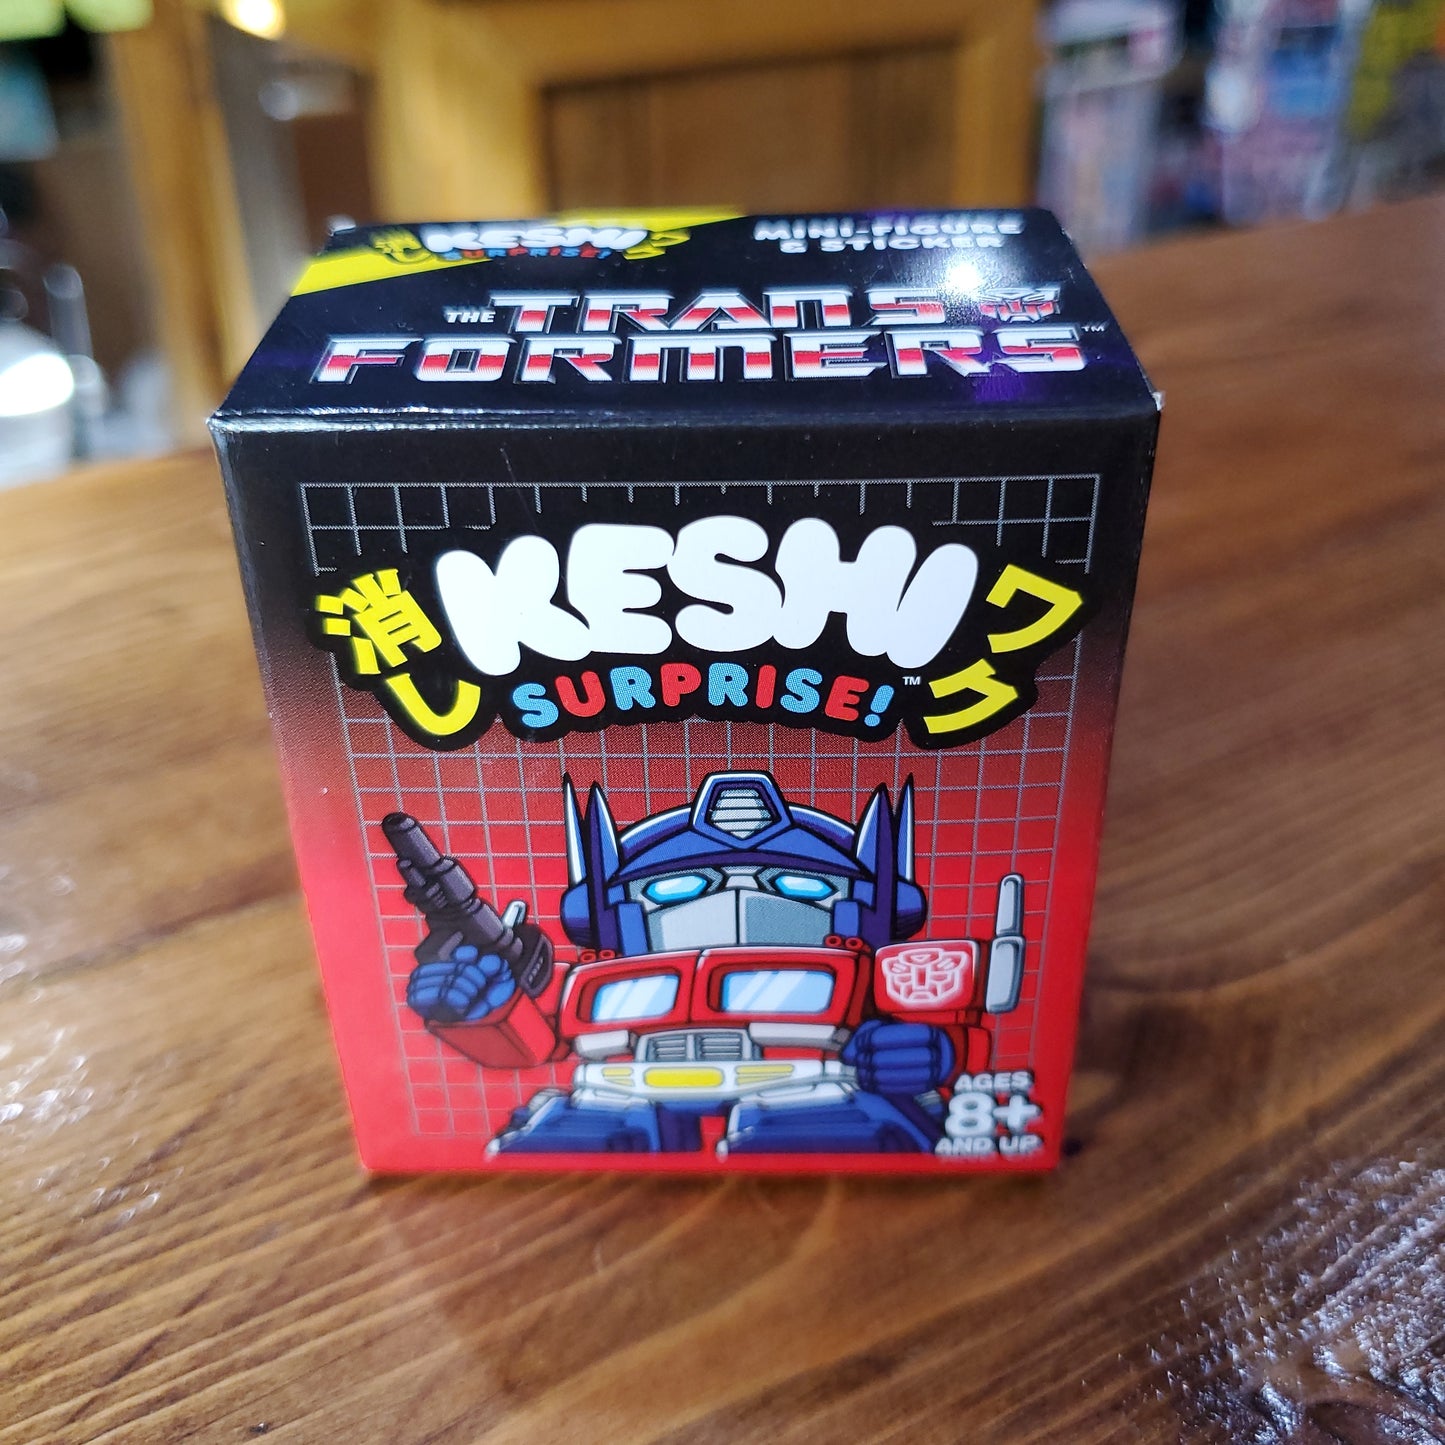 Keshi Surprise! - Transformers Mystery Figure